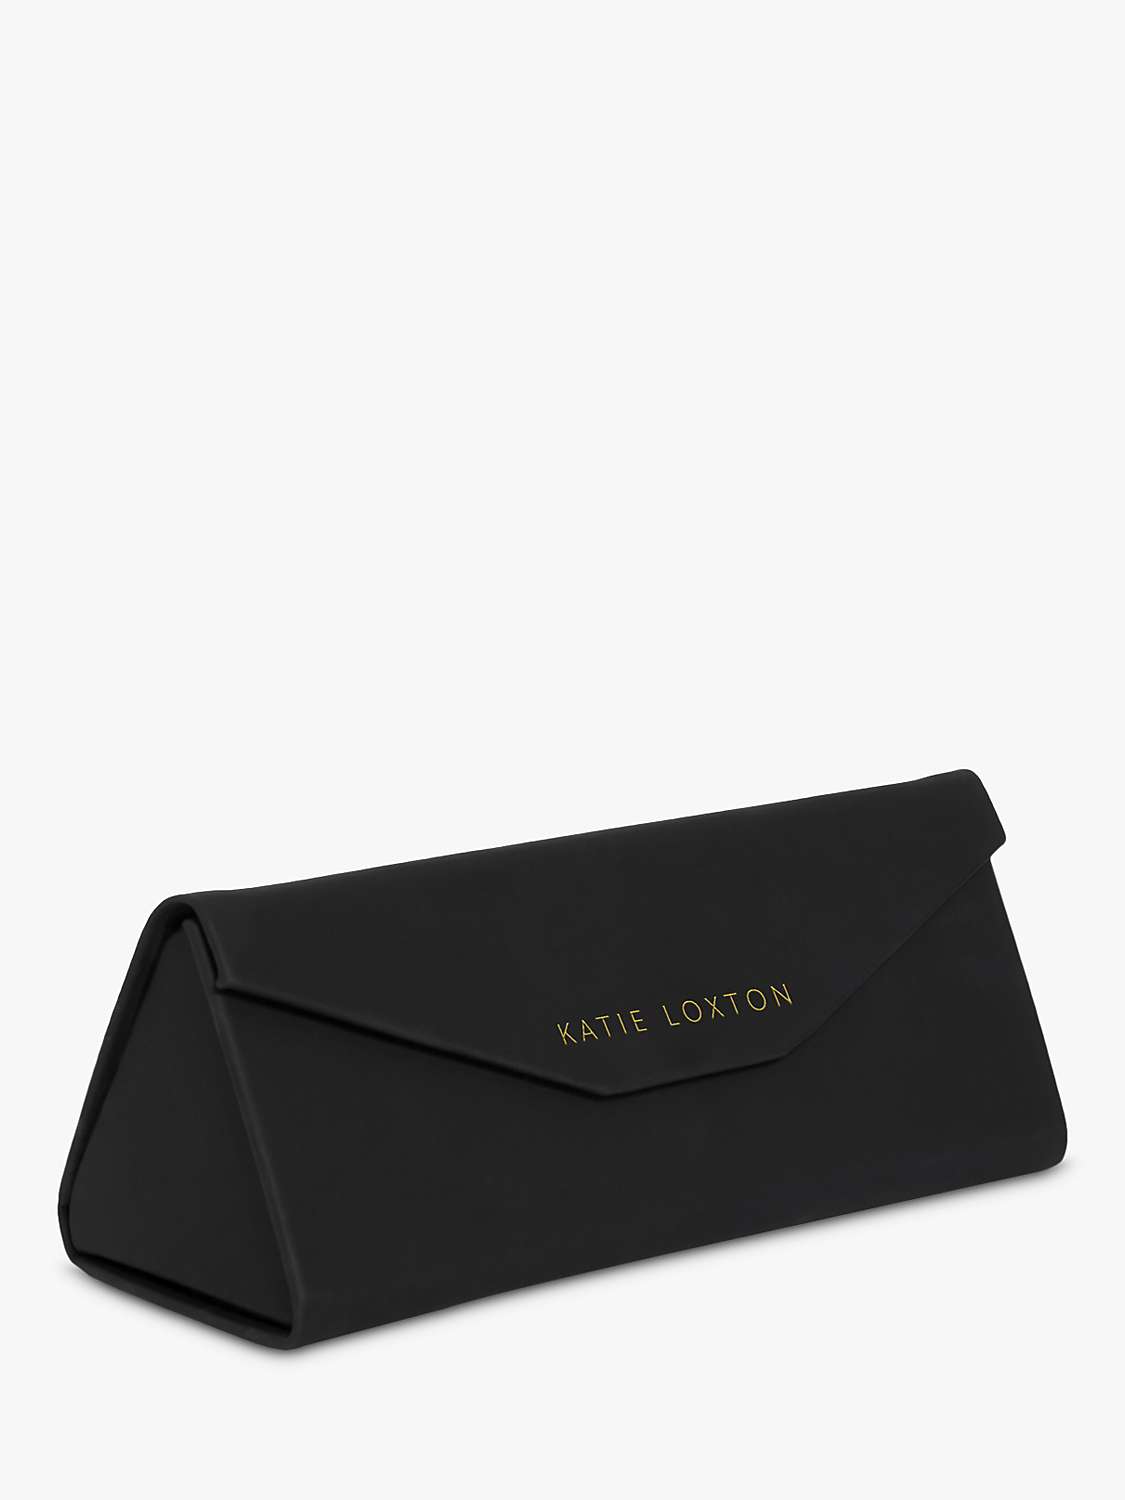 Buy Katie Loxton Amalfi Tortoiseshell Sunglasses, Multi Online at johnlewis.com